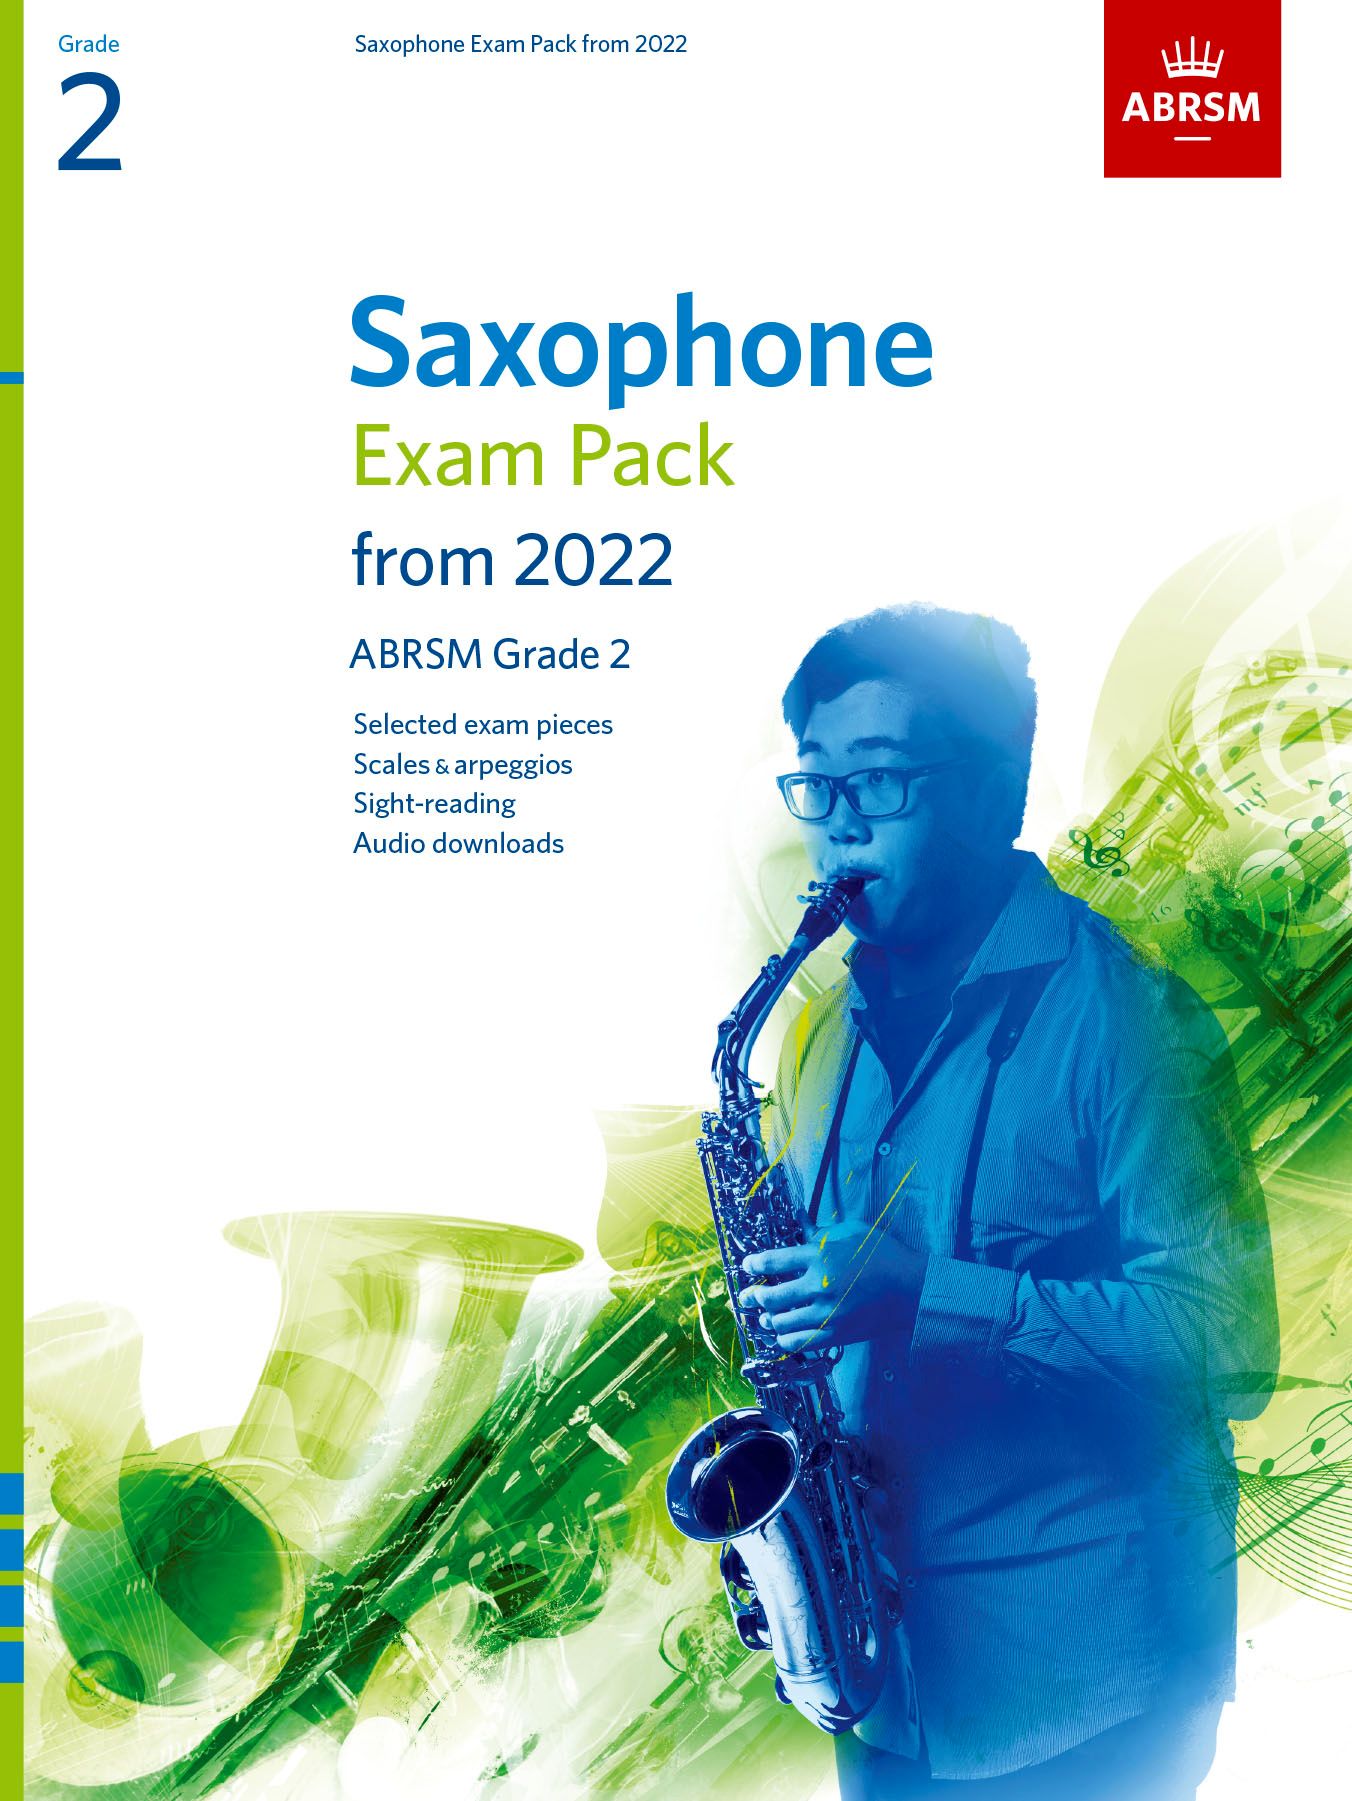 ABRSM Saxophone Exam Pack from 2022, ABRSM Grade 2